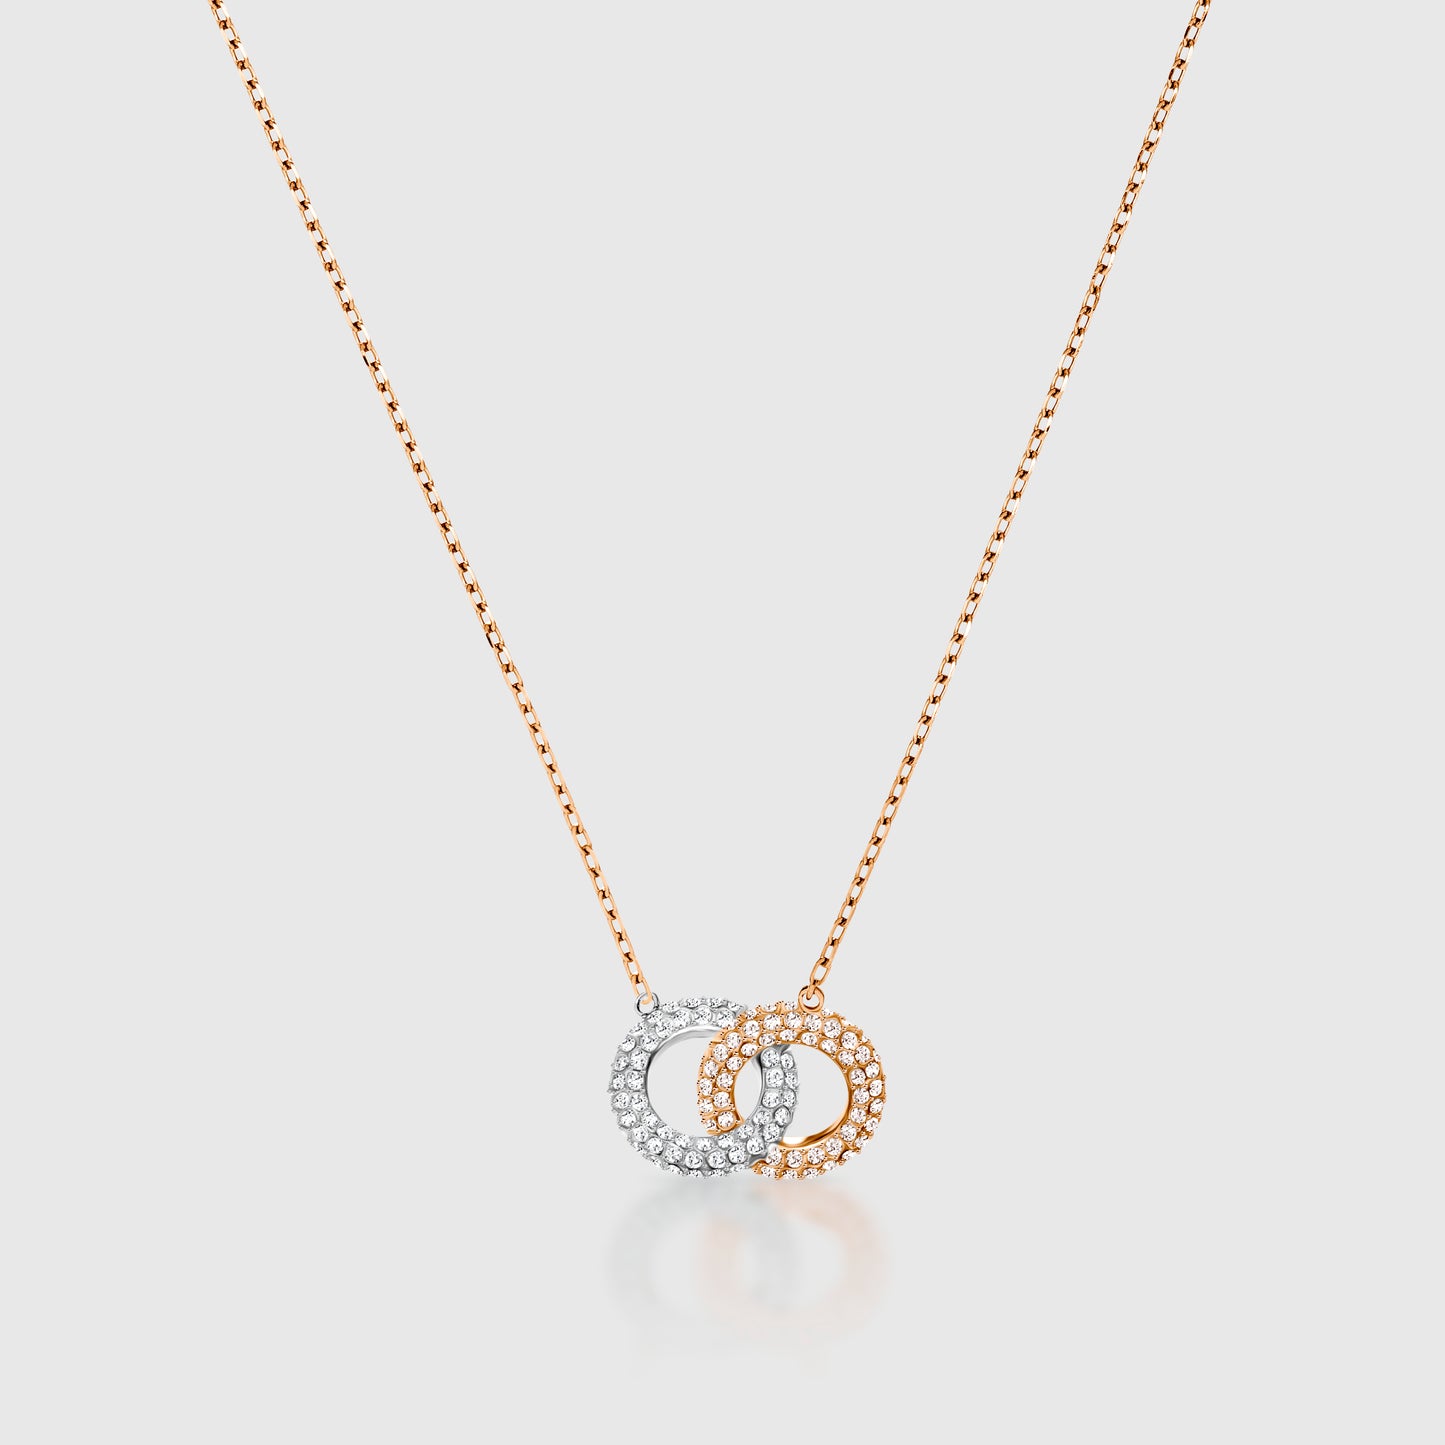 Swarovski Stone Necklace, Multi-colored, Rose Gold Plating 5414999